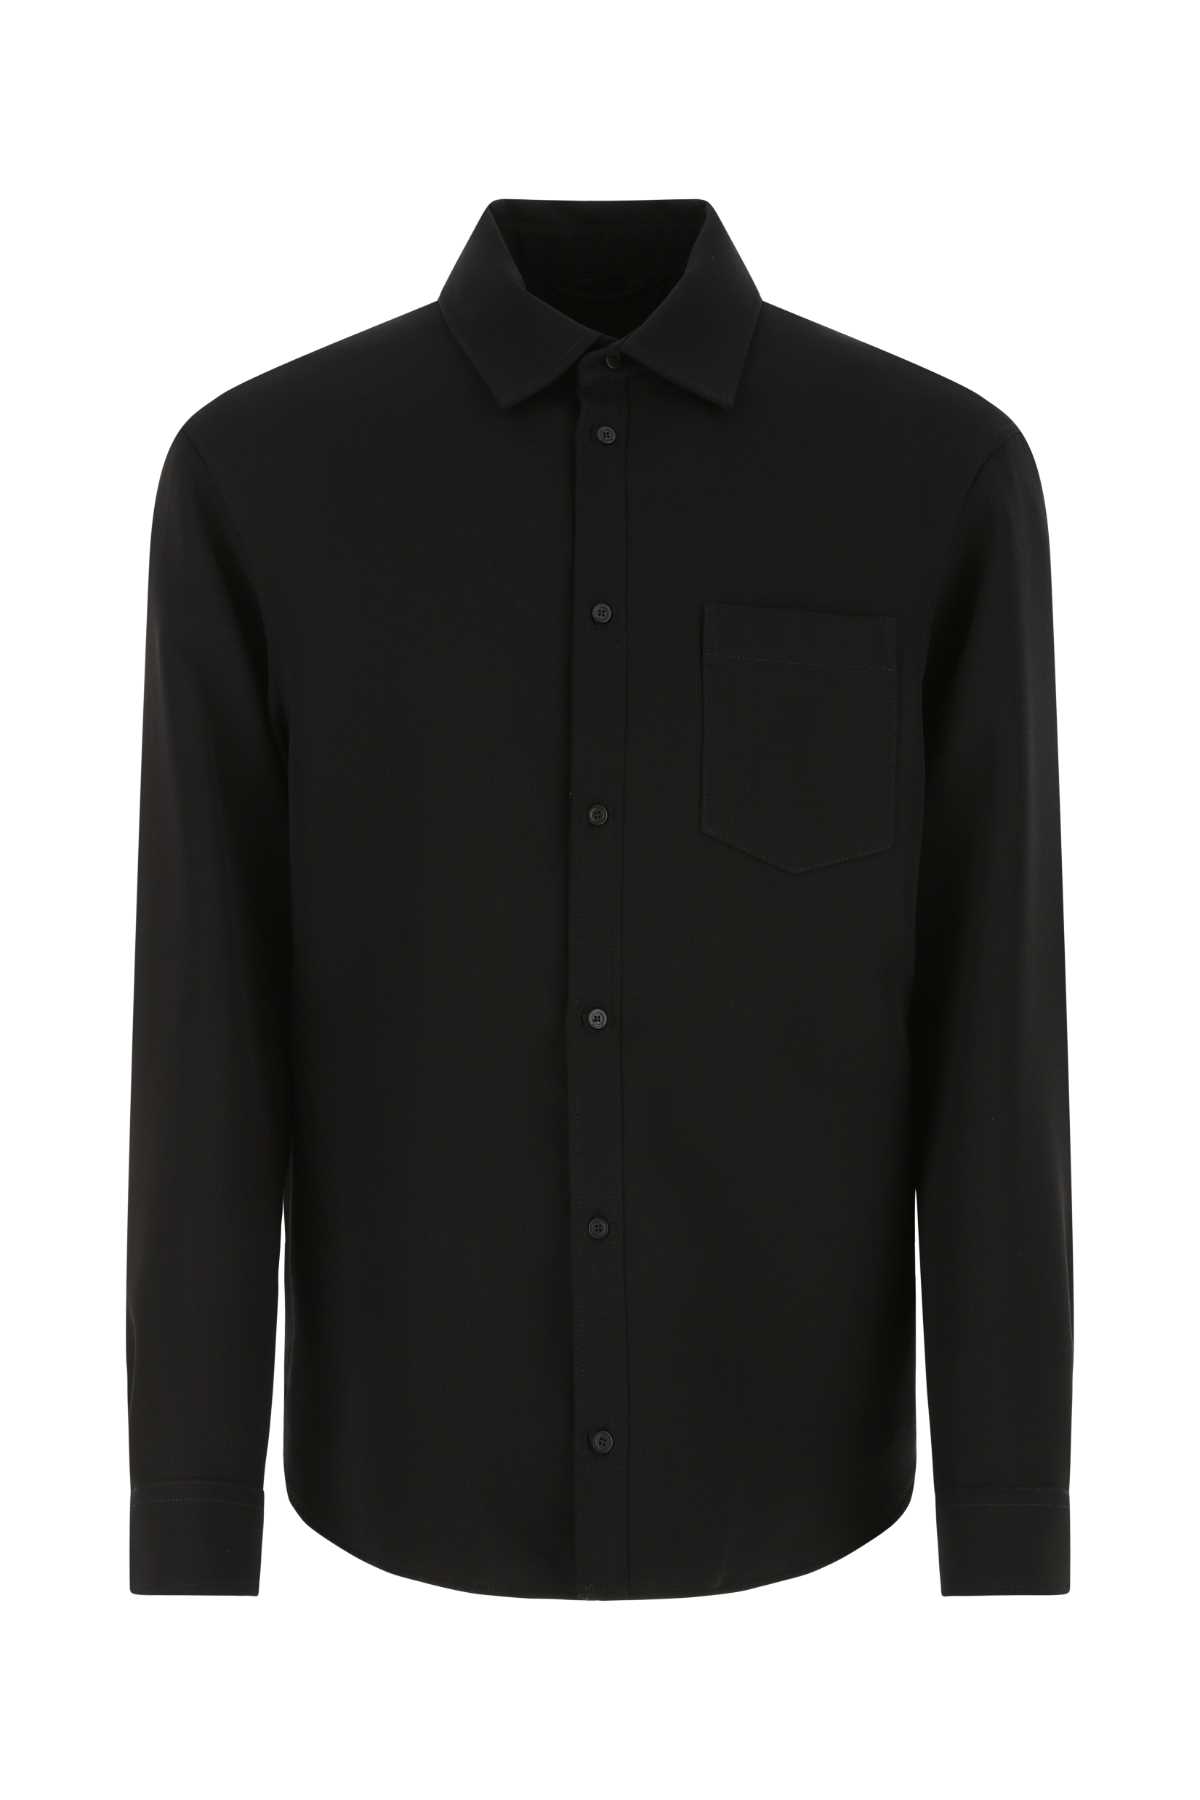 Black Wool Blend Shirt